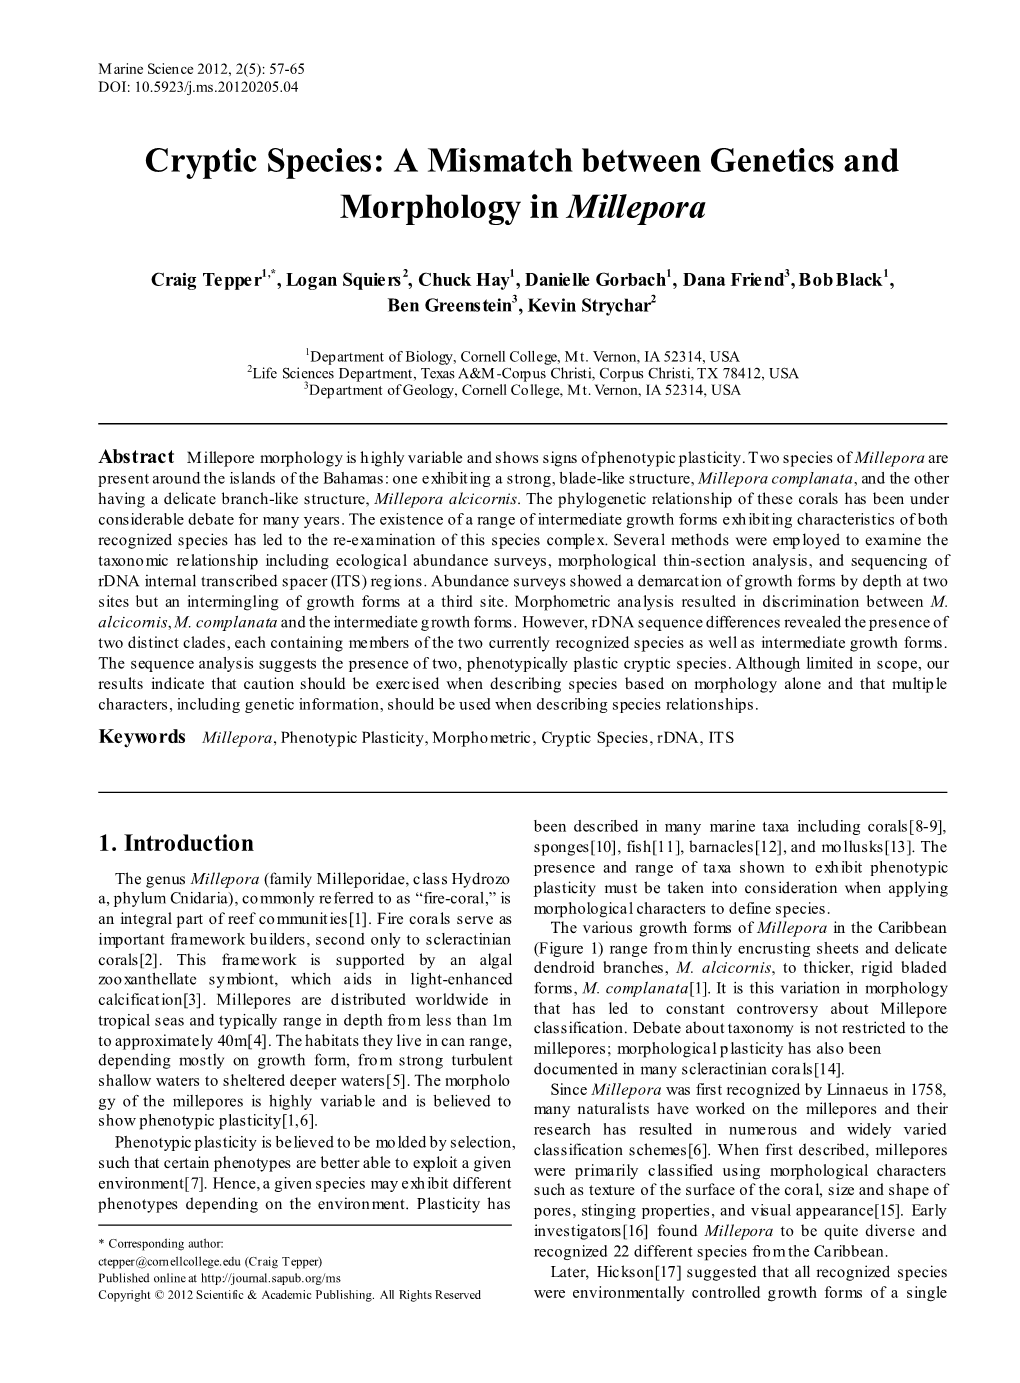 &lt;I&gt;Millepora&lt;/I&gt;, Phenotypic Plasticity, Morphometric, Cryptic Species, Rdna